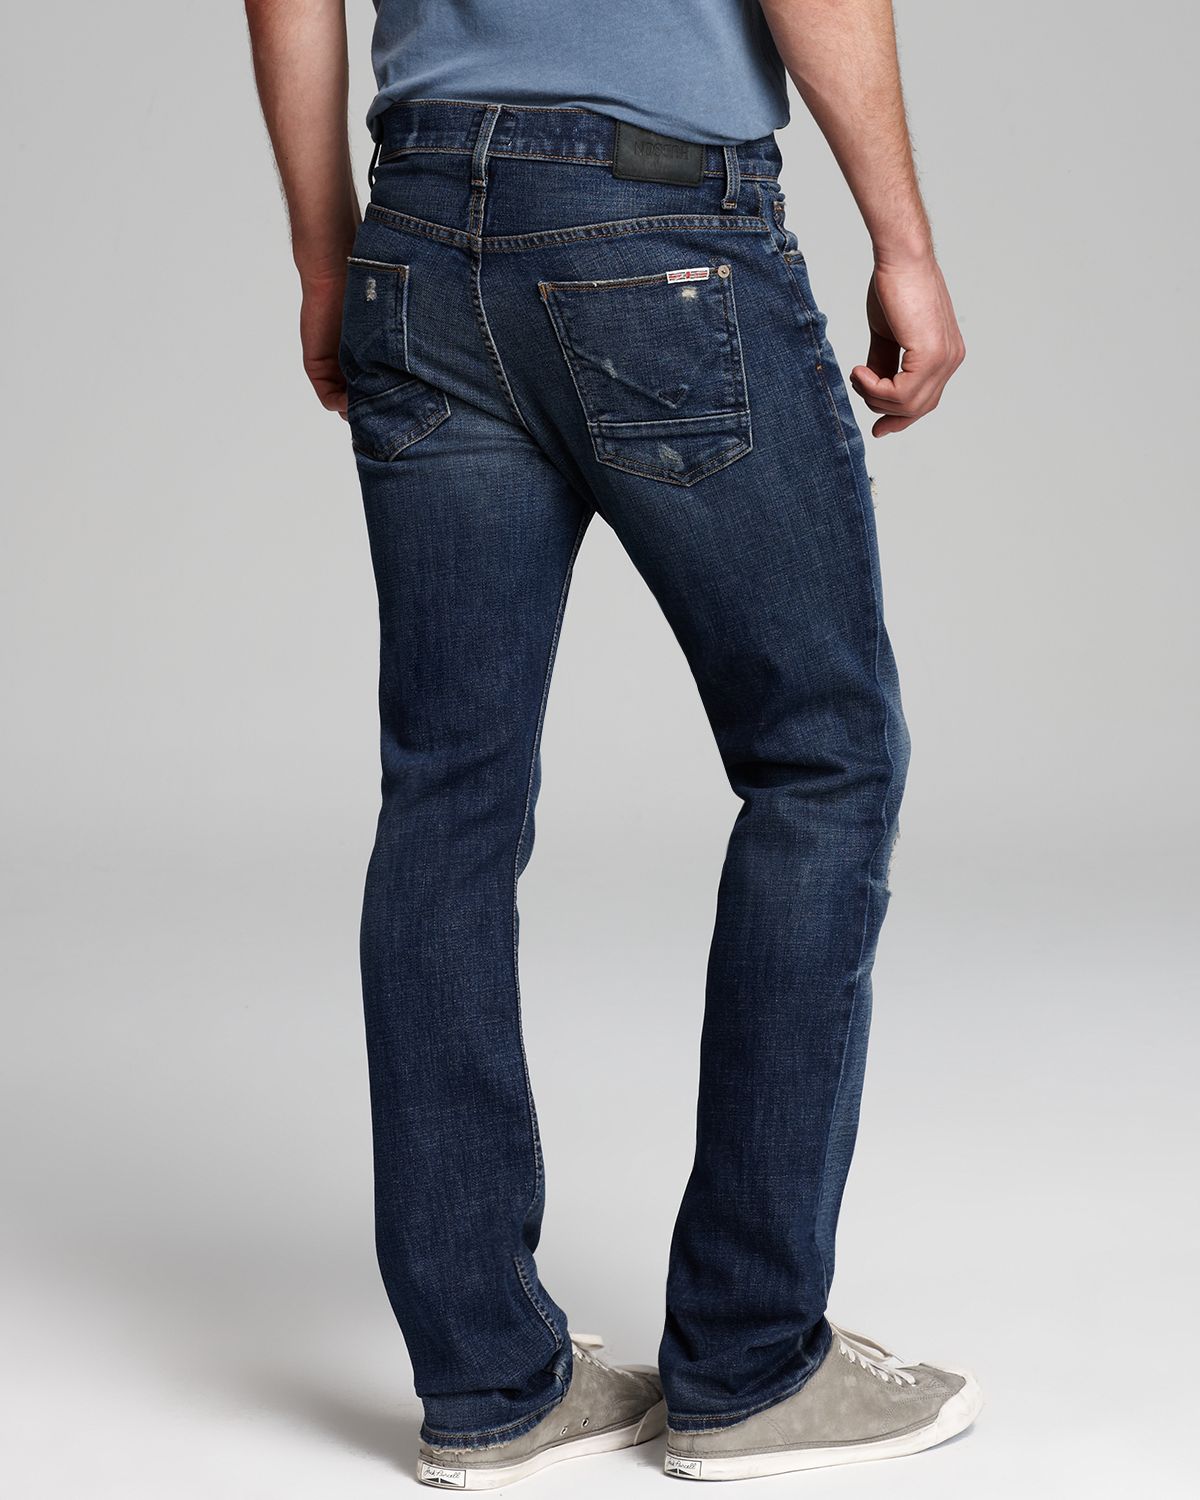 Hudson Jeans Jeans Byron Slim Straight in Sander in Blue for Men - Lyst